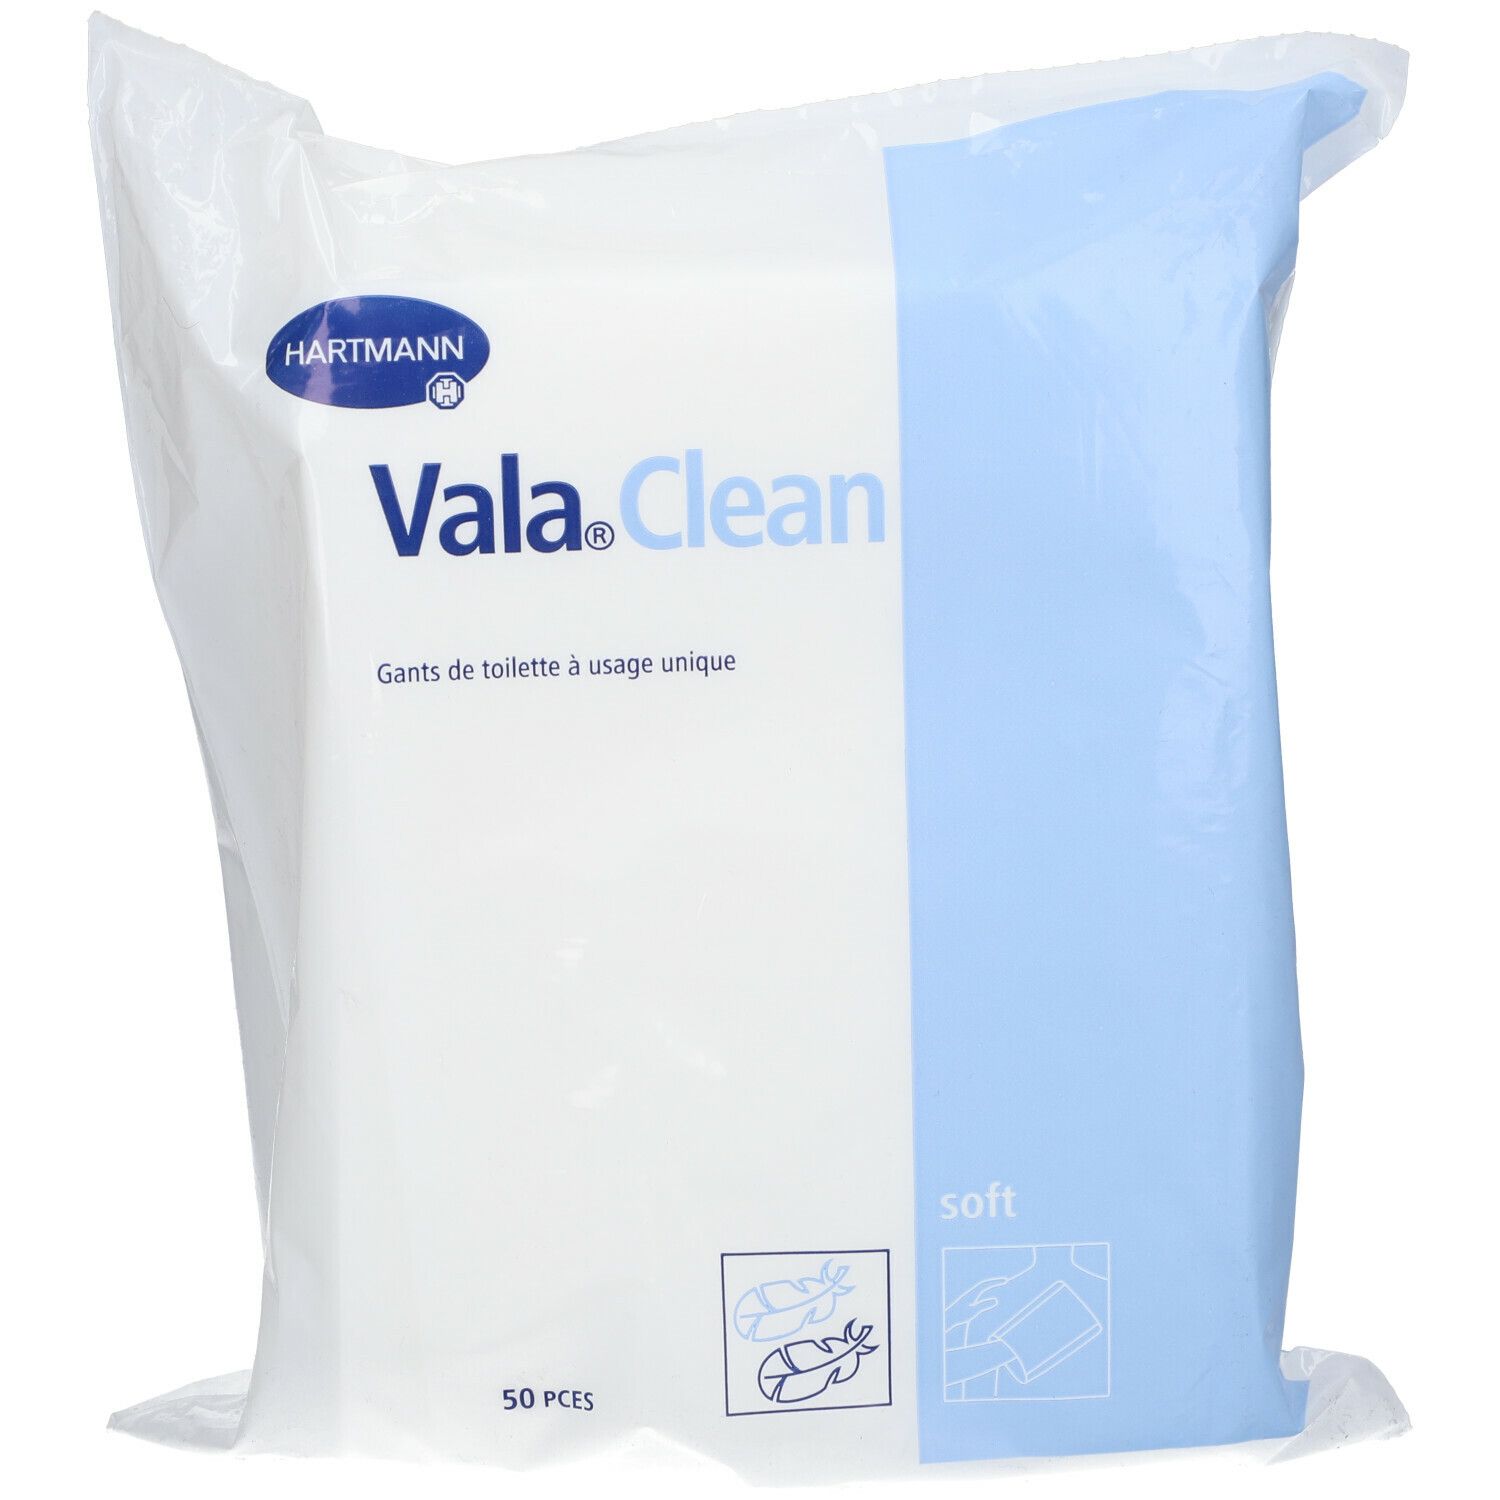 Hartmann Vala®Clean Soft, Gant de toilette